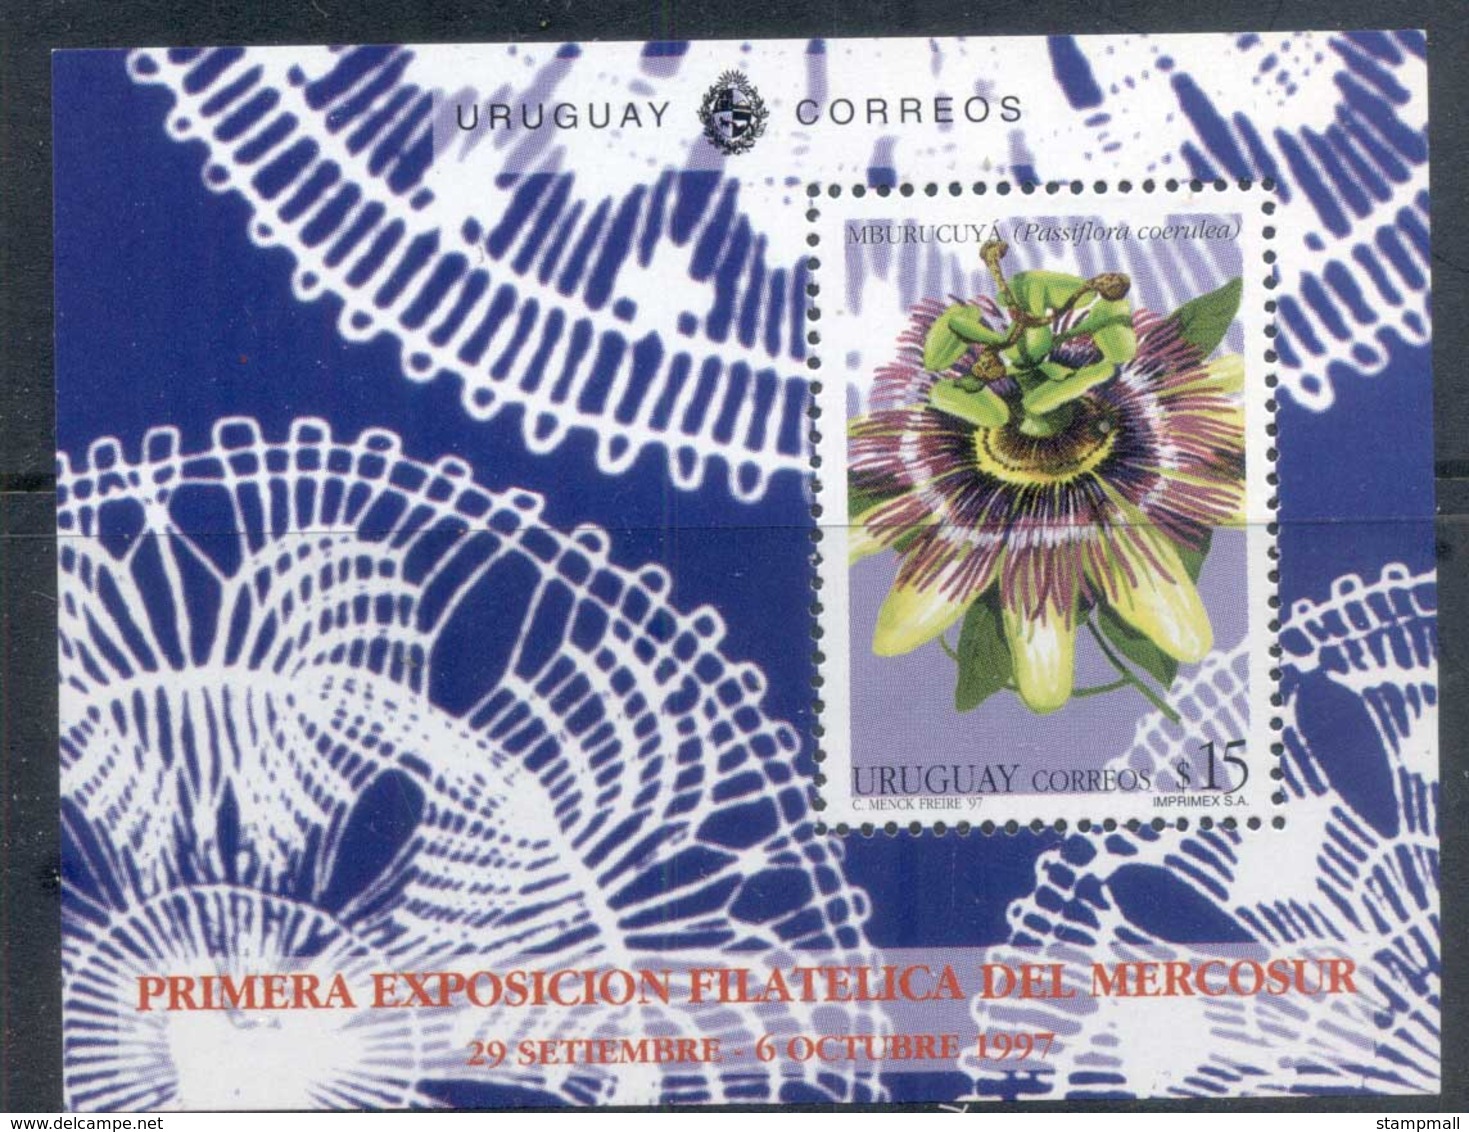 Uruguay 1997 Flower, Mercosur Stamp Ex. MS MUH - Uruguay